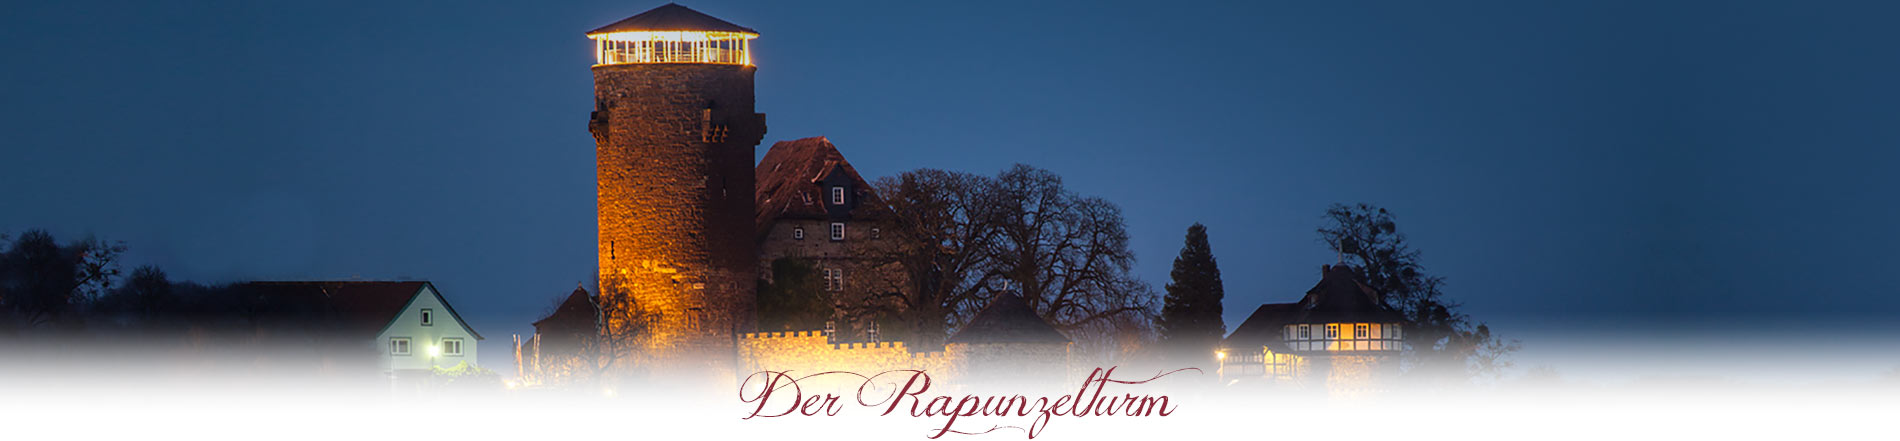 Burg-Trendelburg-rapunzel